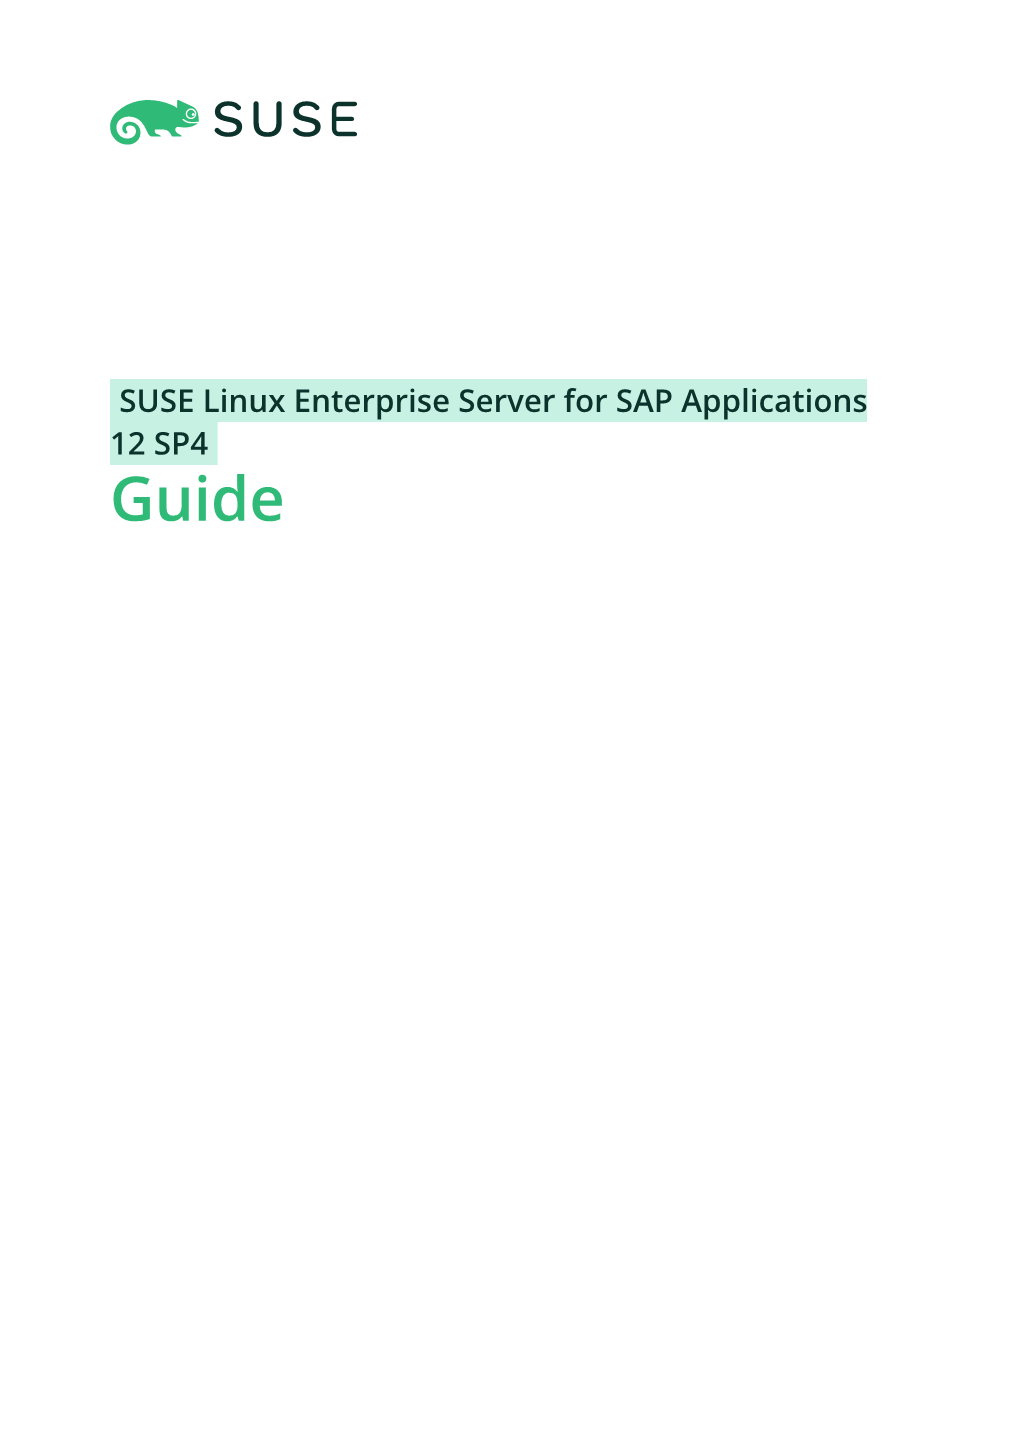 SUSE Linux Enterprise Server for SAP Applications 12 SP4 Guide Guide SUSE Linux Enterprise Server for SAP Applications 12 SP4